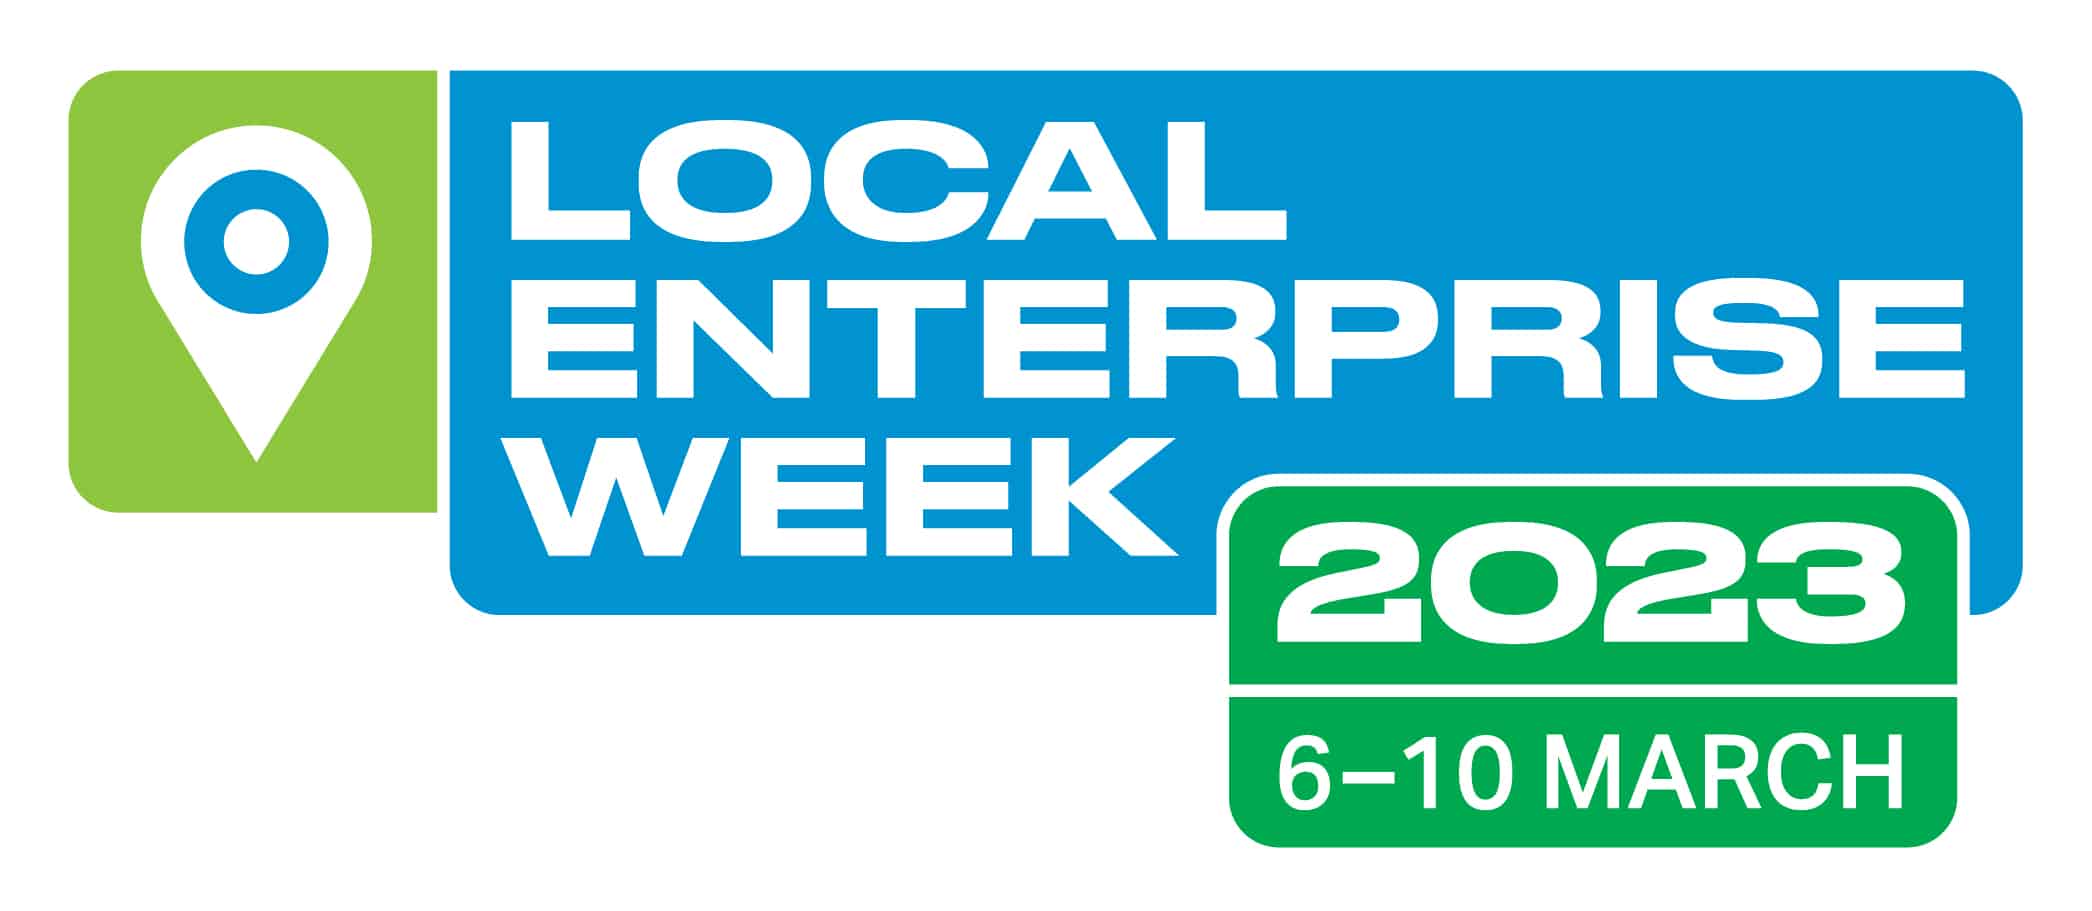 local enterprise week 2023, ireland, business, entrepreneur